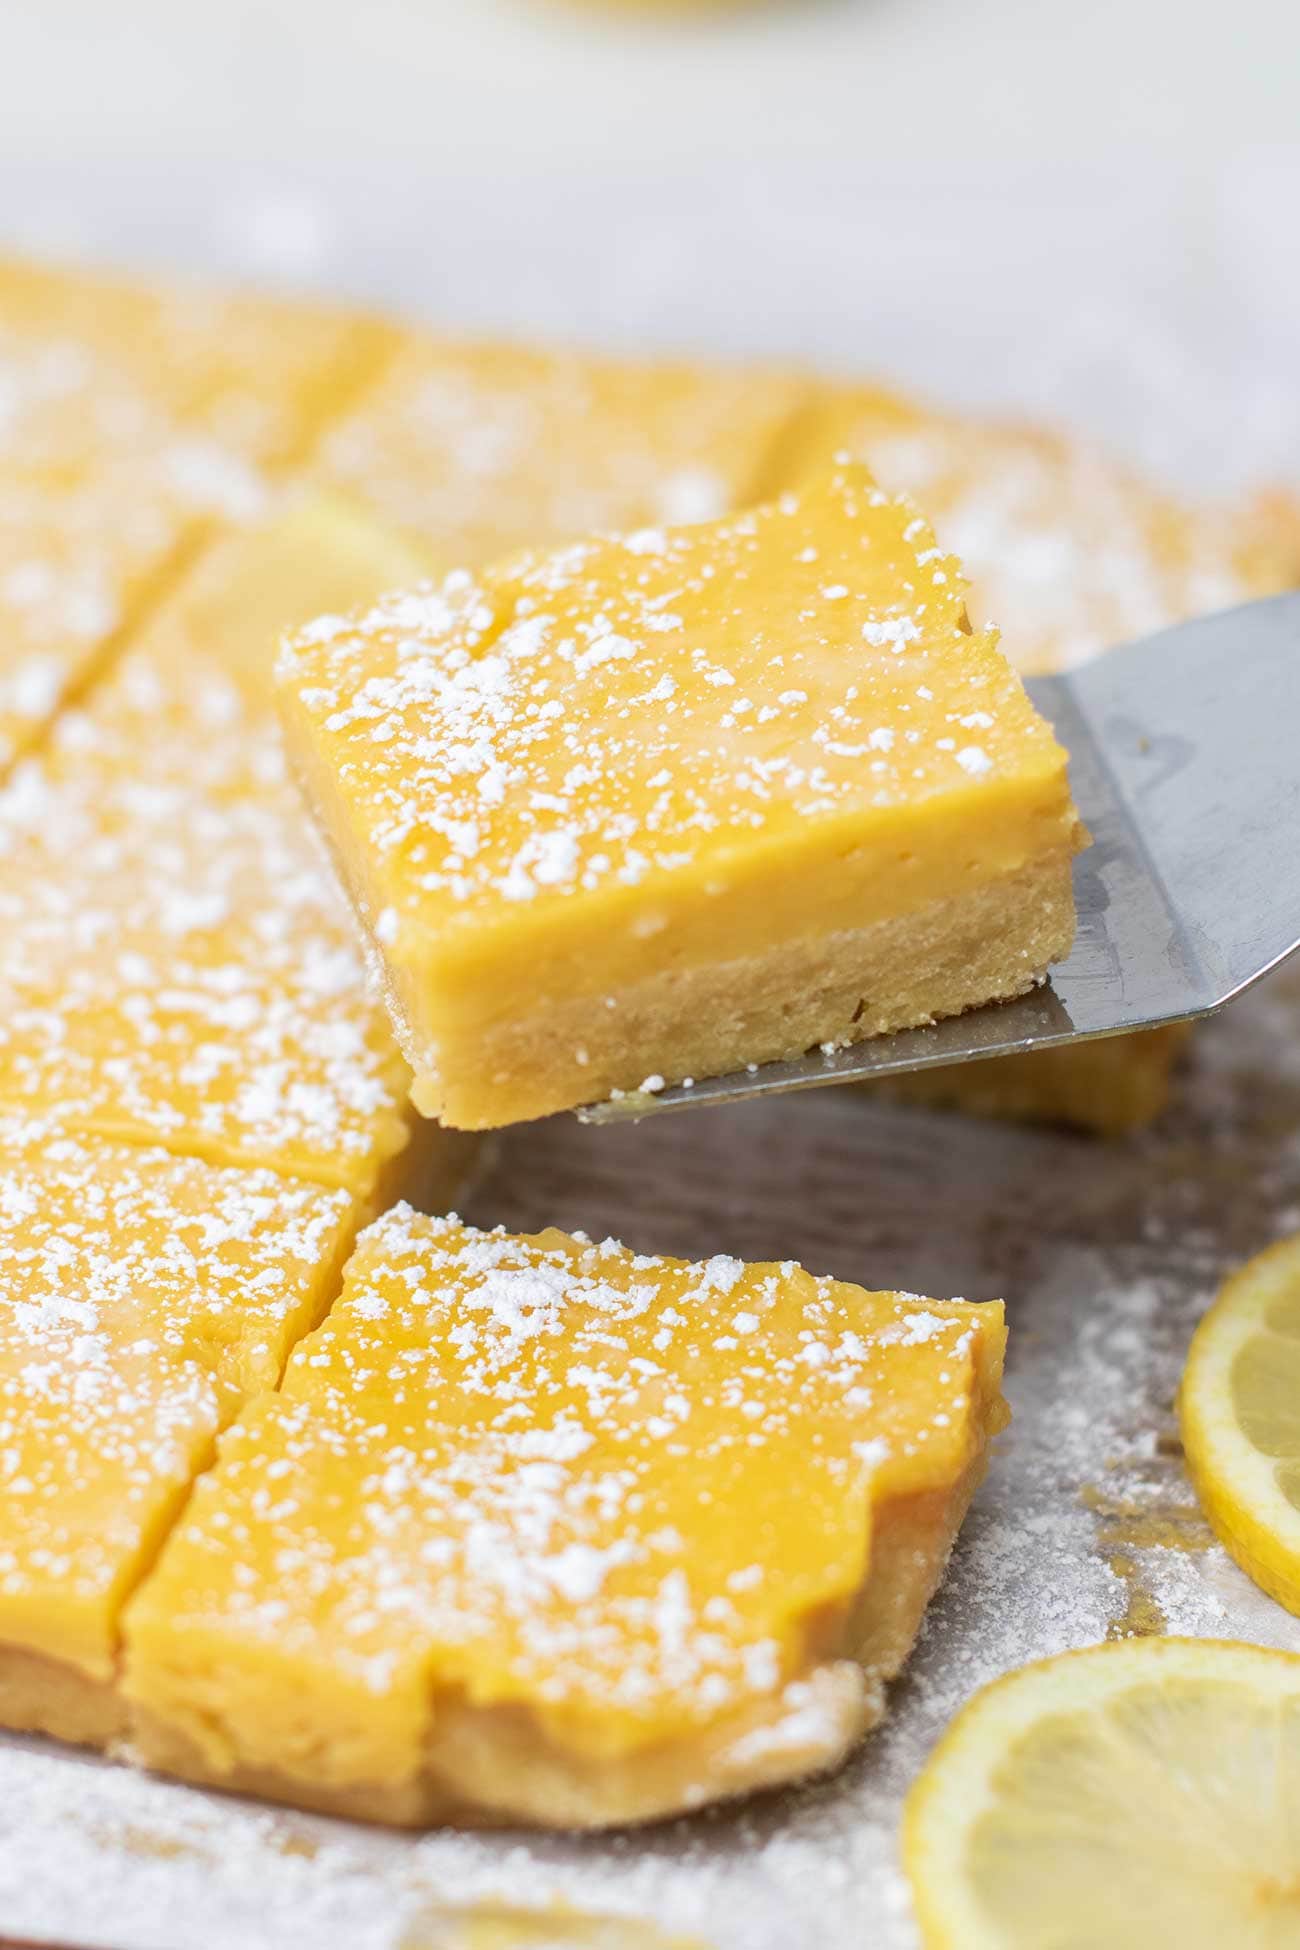 A lemon bar cut into a perfect square.